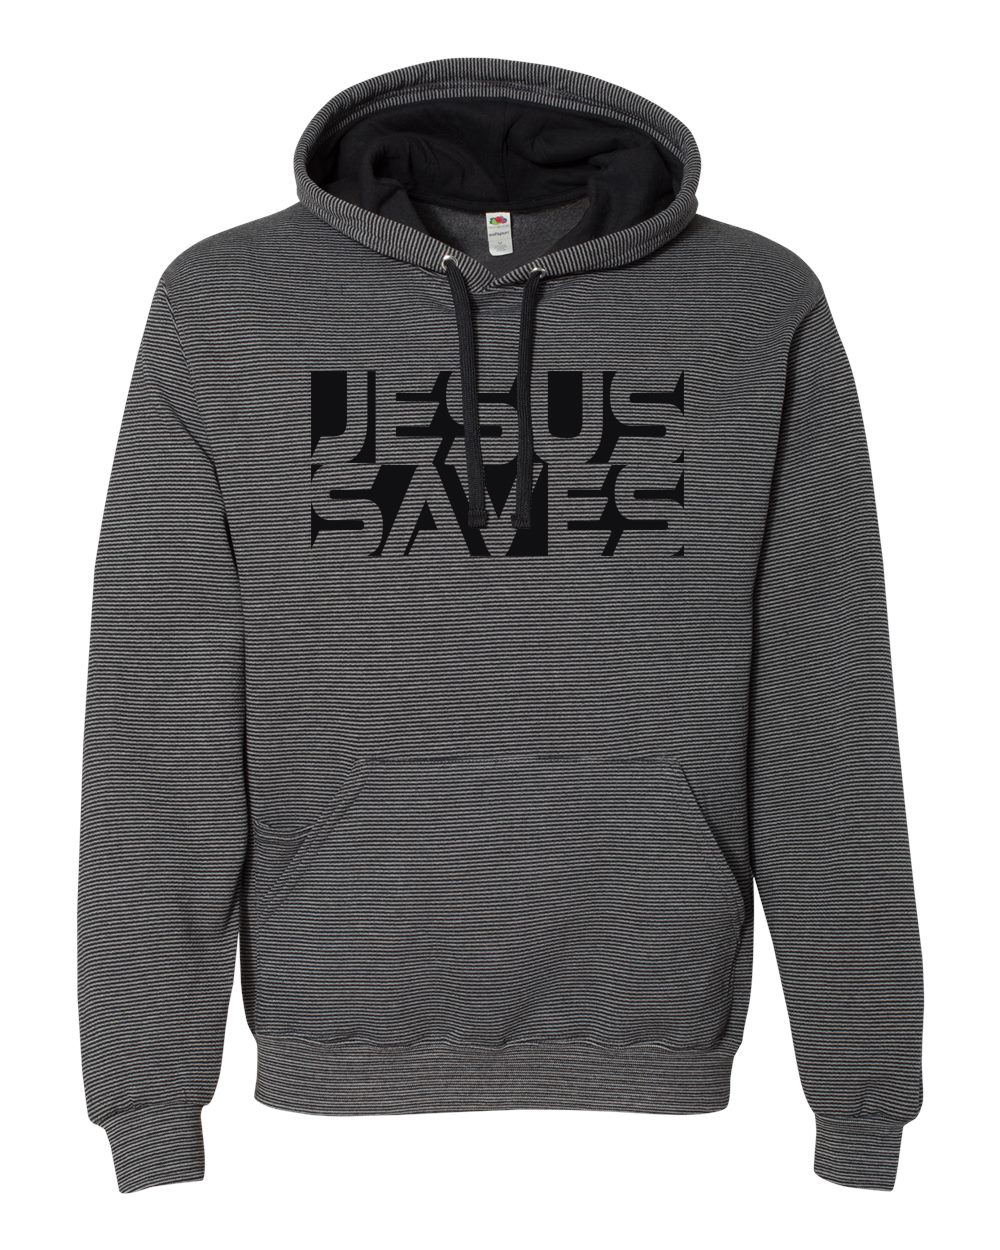 JESUS SAVES Sofspun® Microstripe Hooded Sweatshirt with EDC pocket